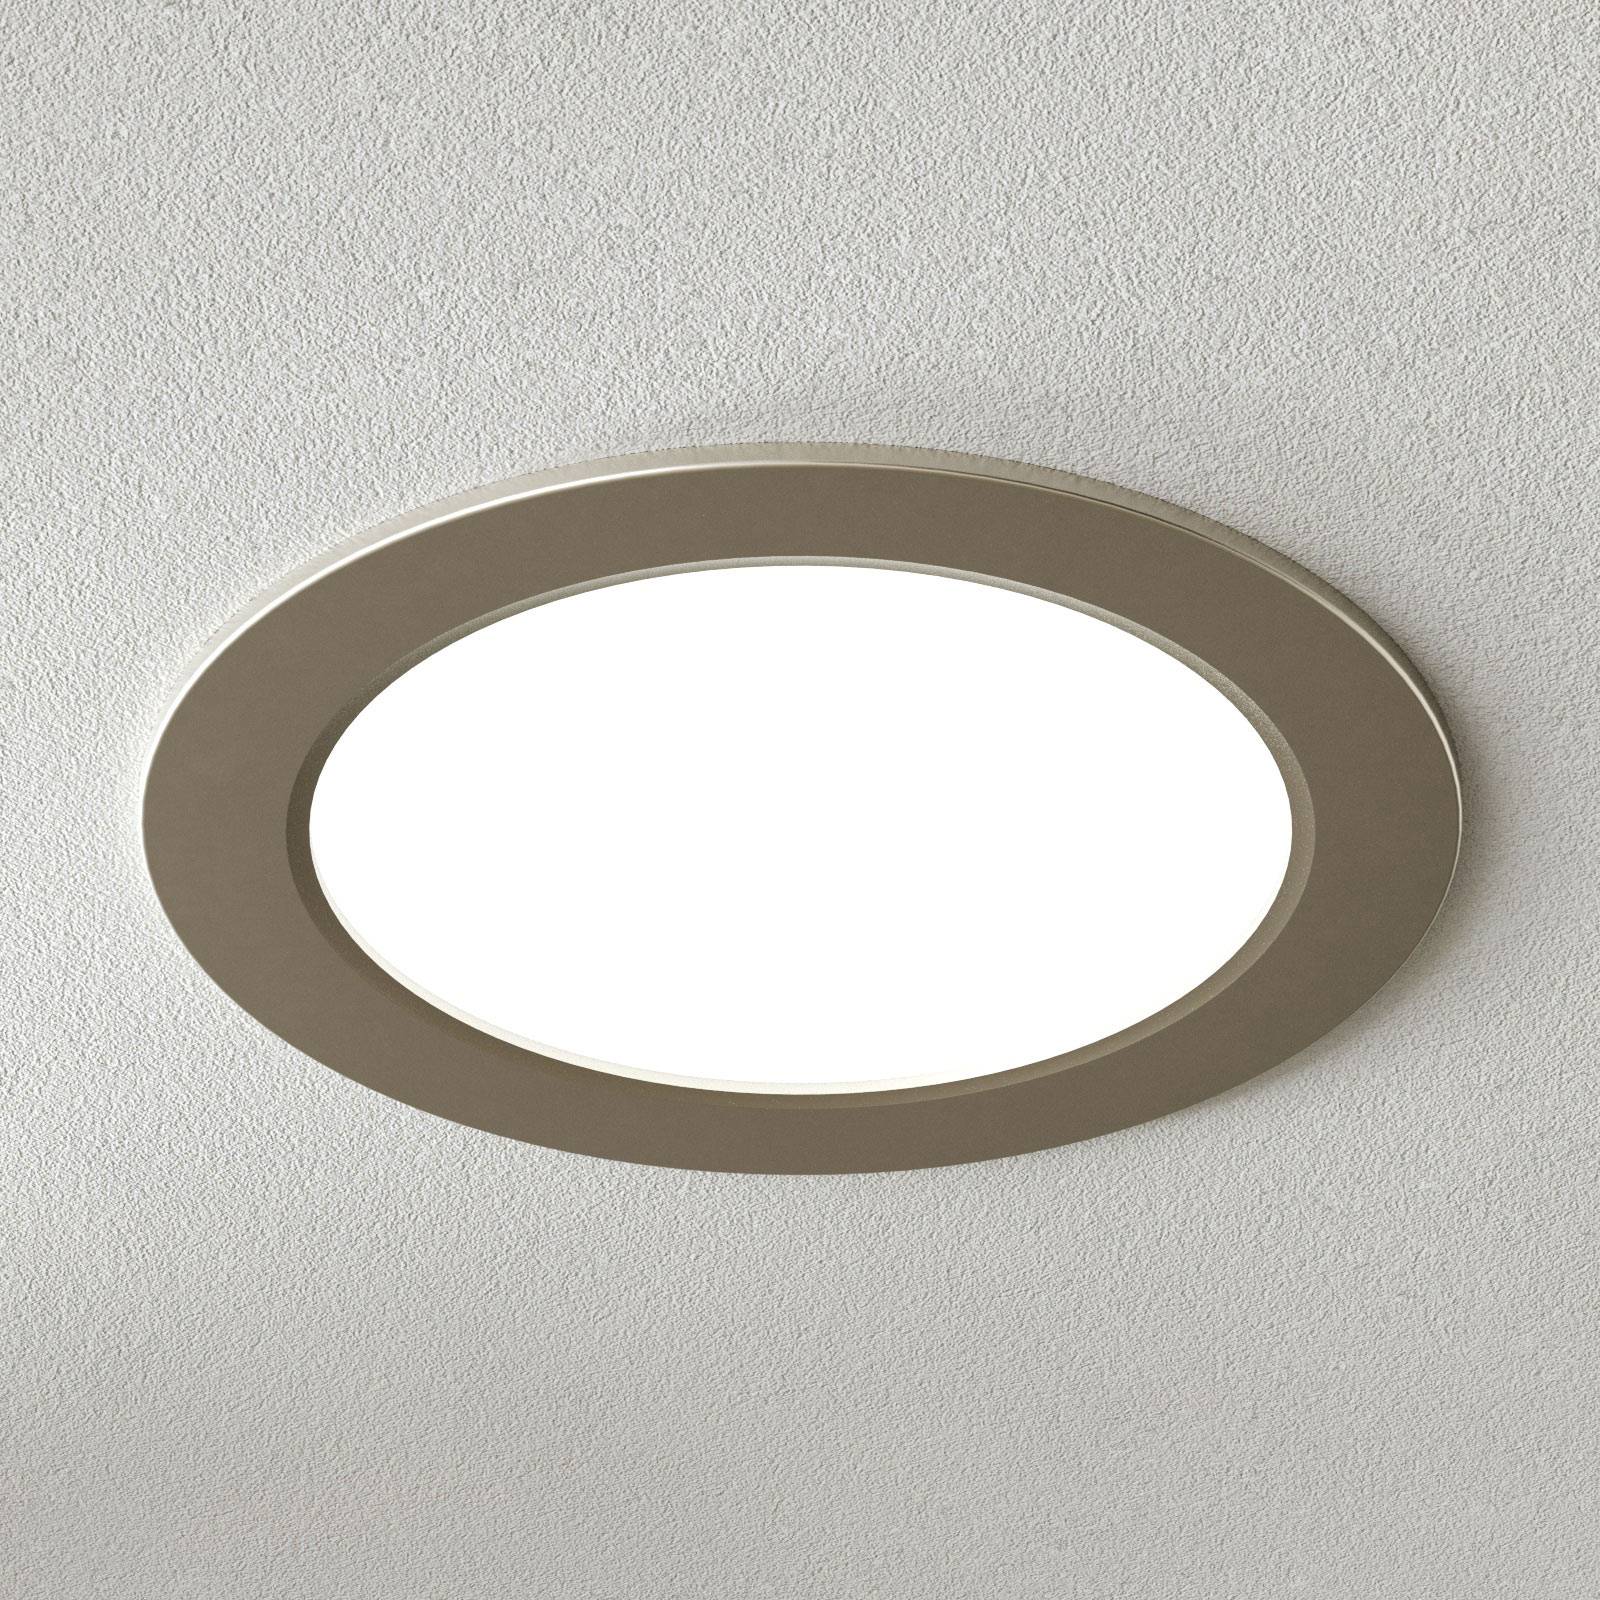 Lampa sufitowa wpuszczana LED Pindos, nikiel